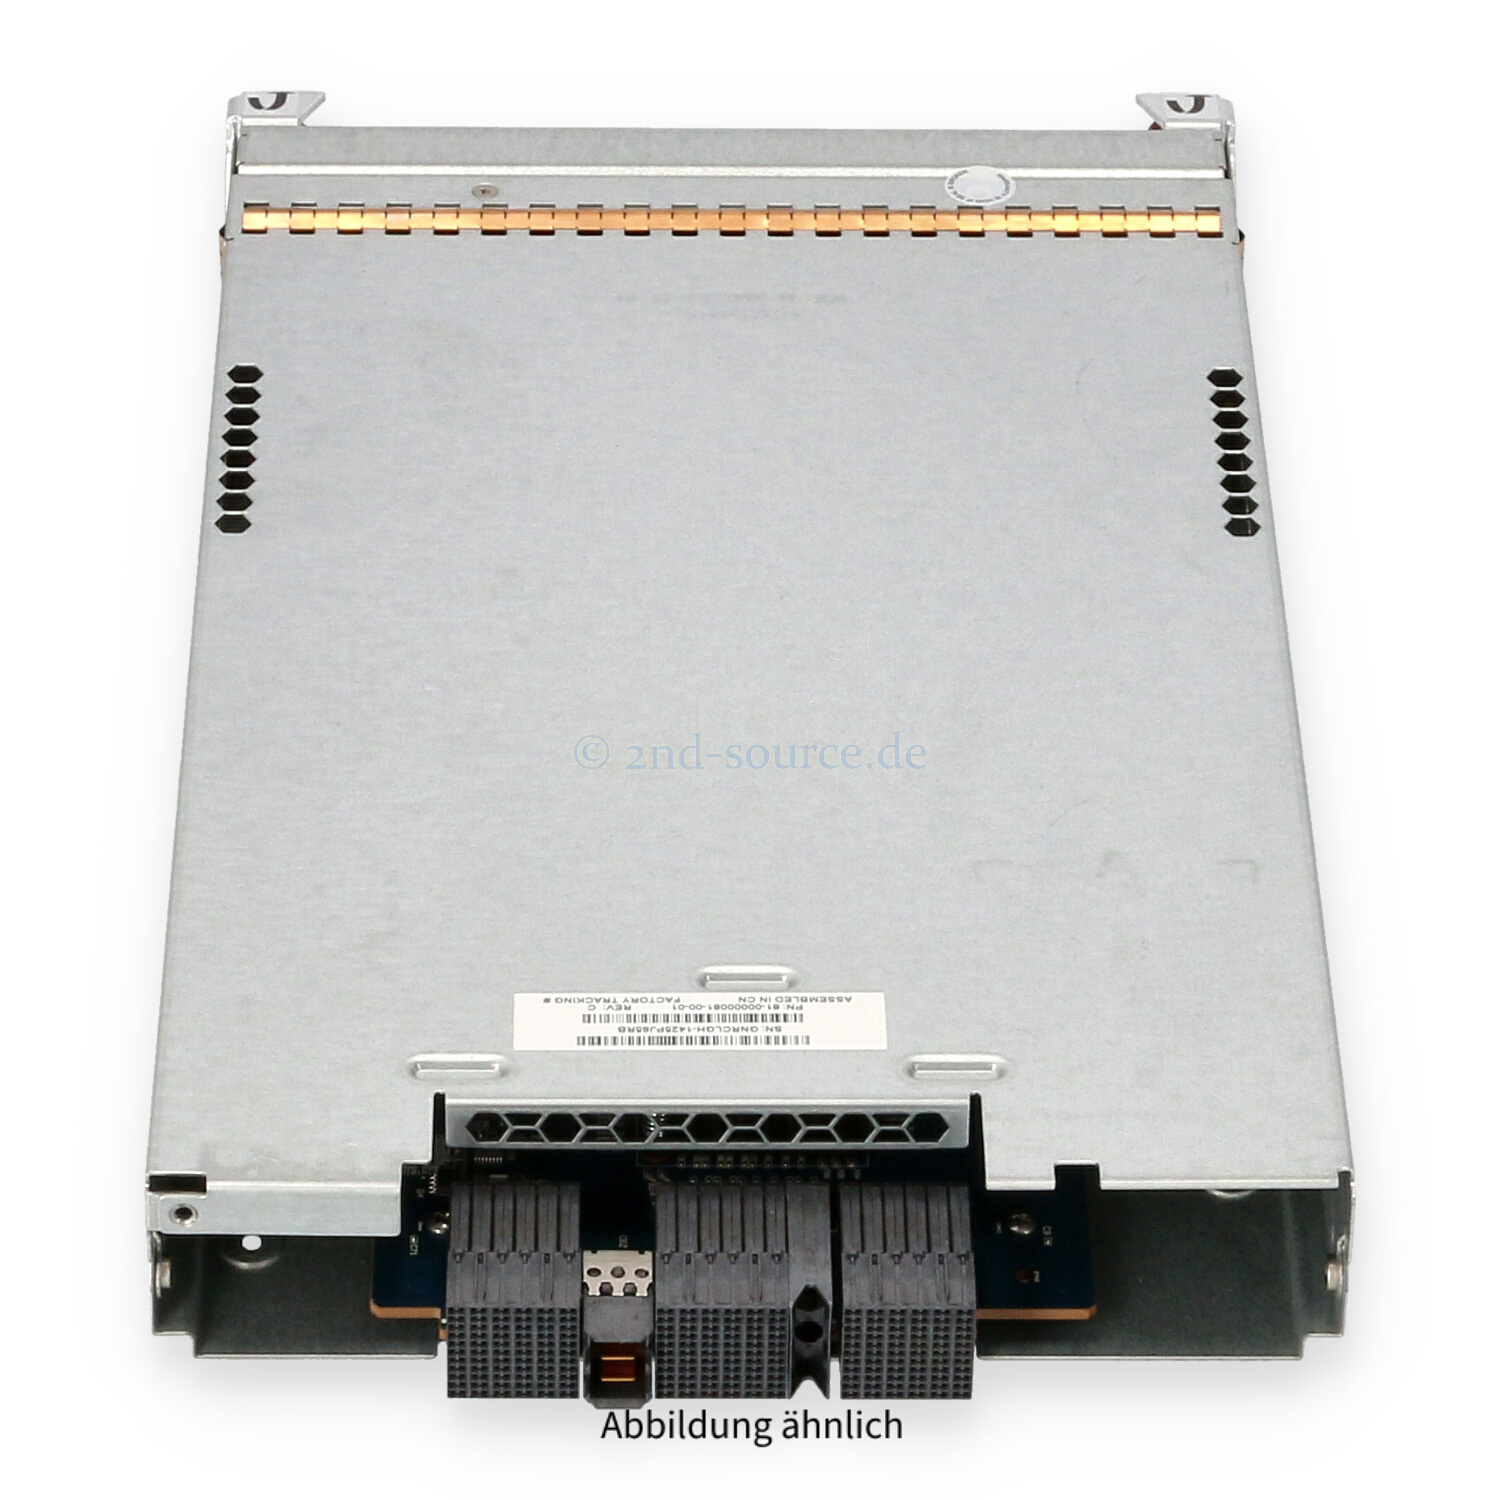 HPE I/O Module 6G MSA 2040 717873-001